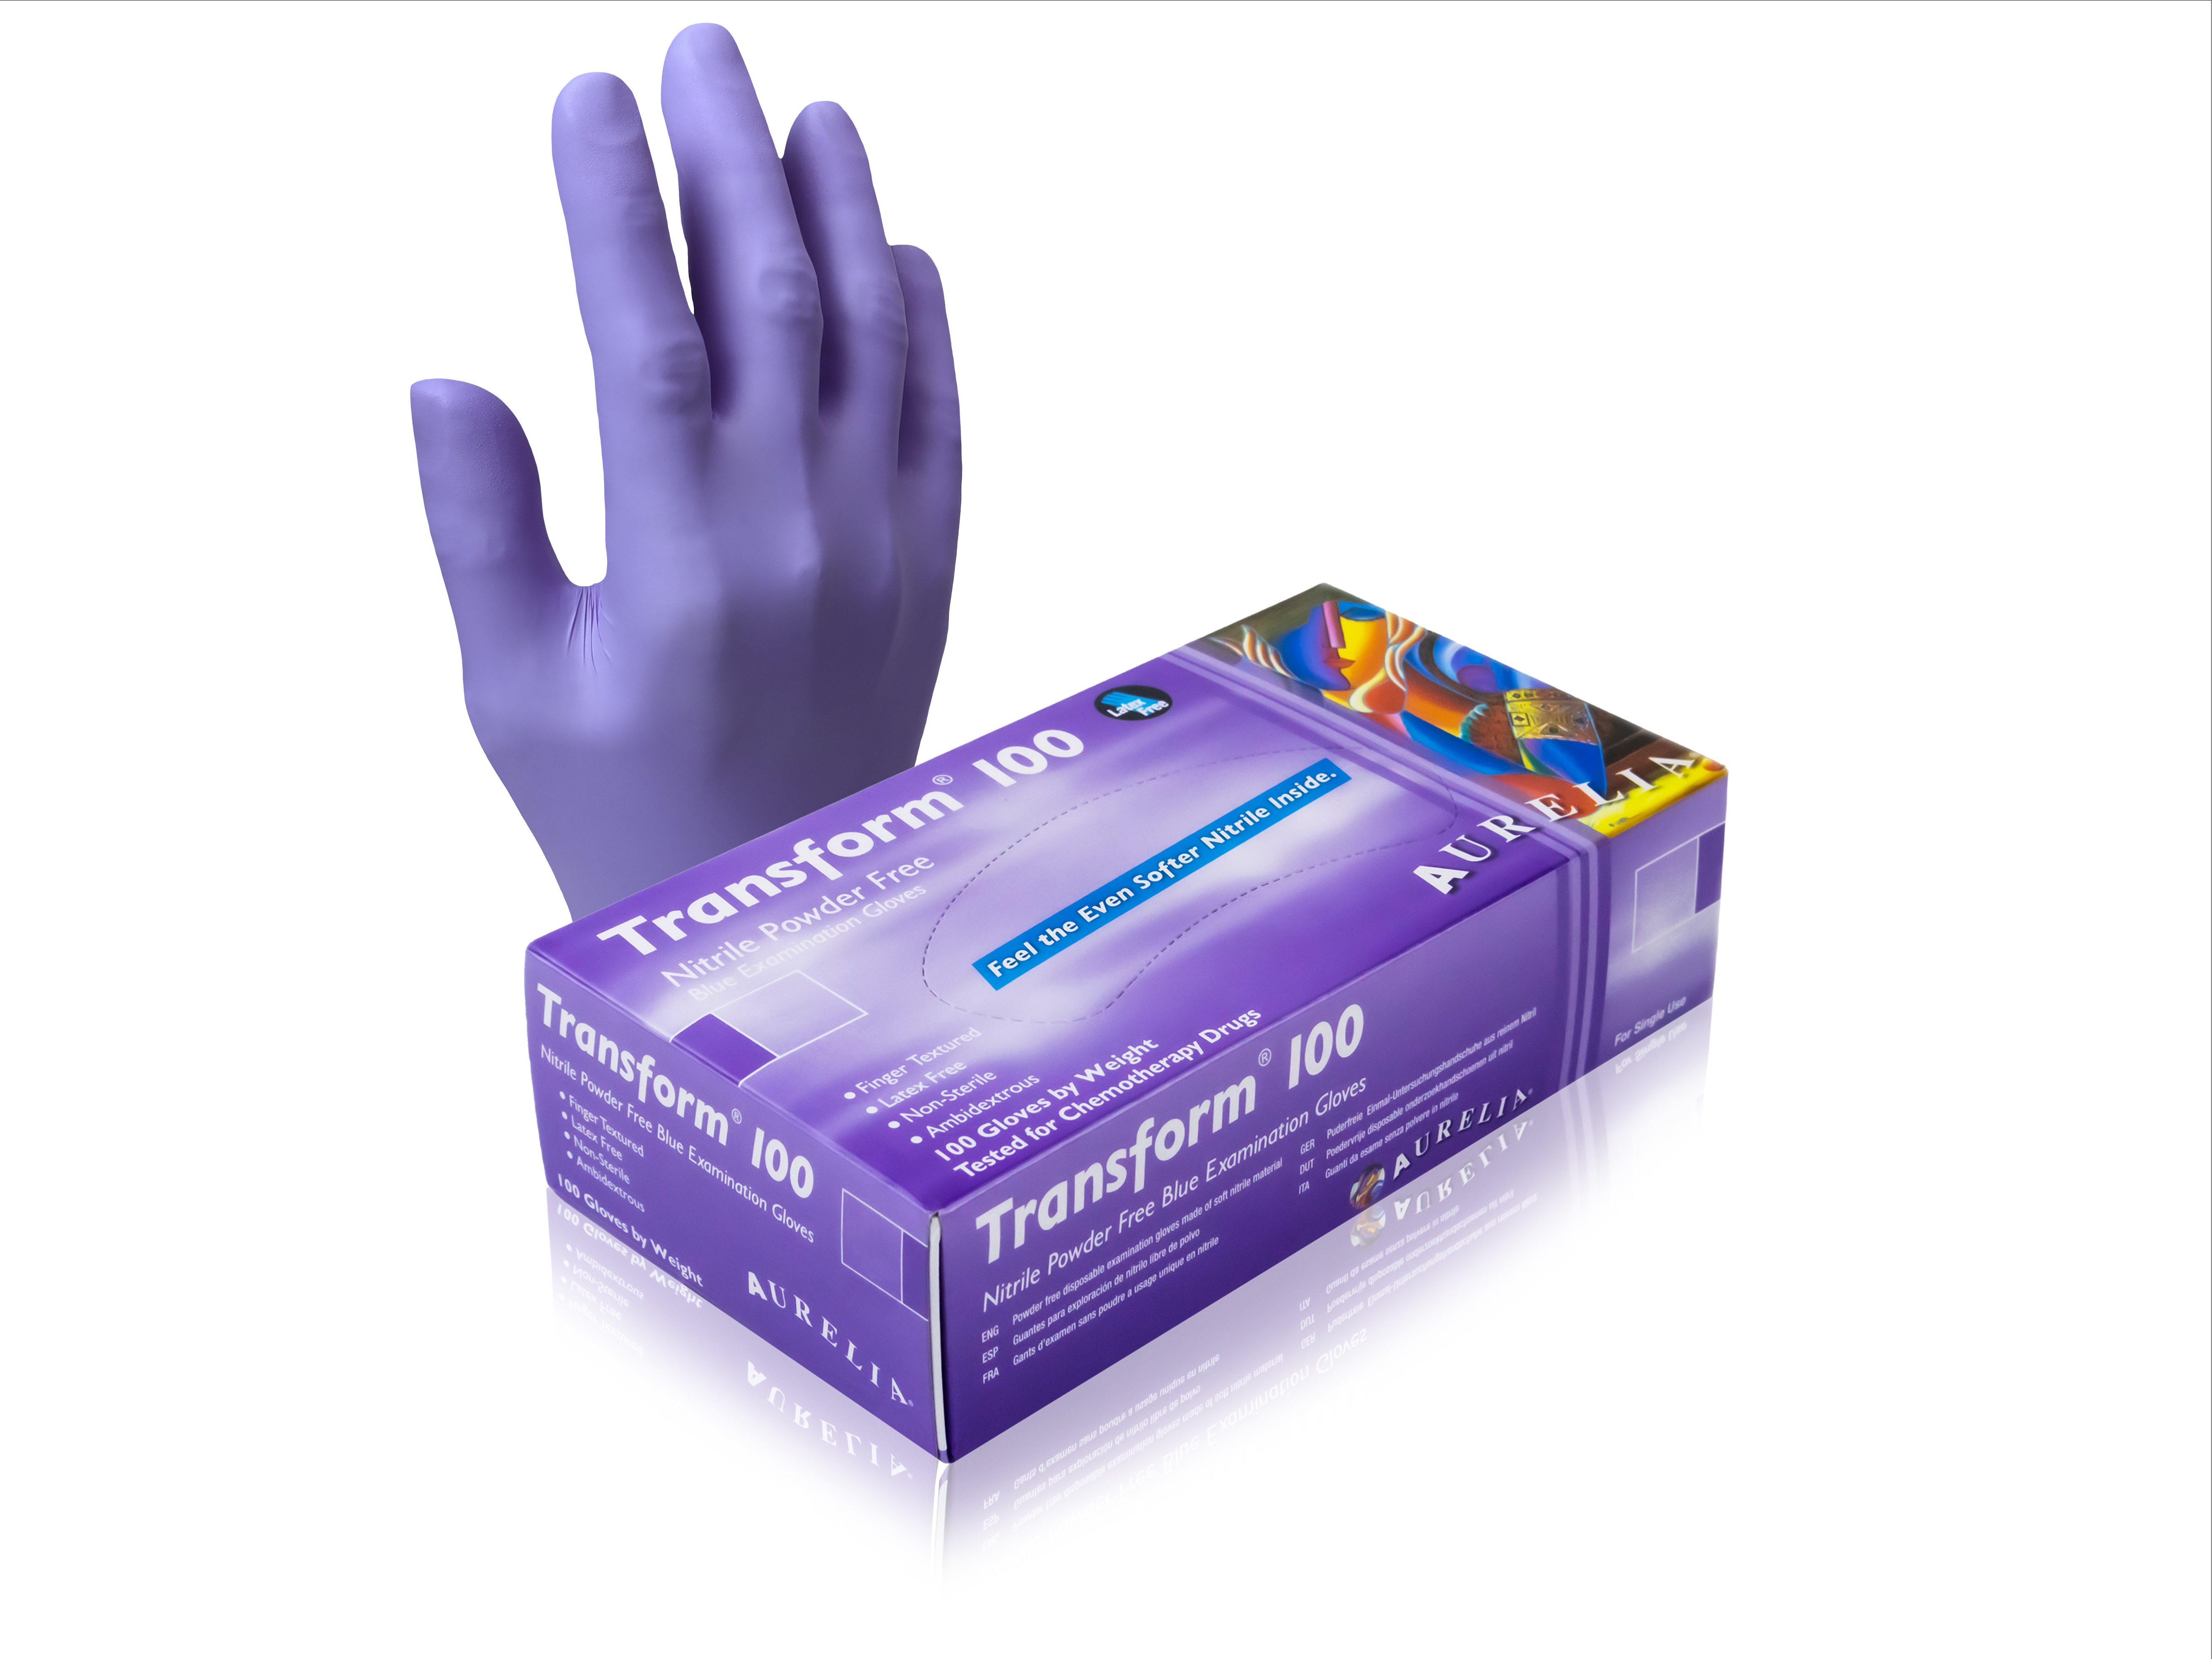 Aurelia Transform 100 Glove Box 2